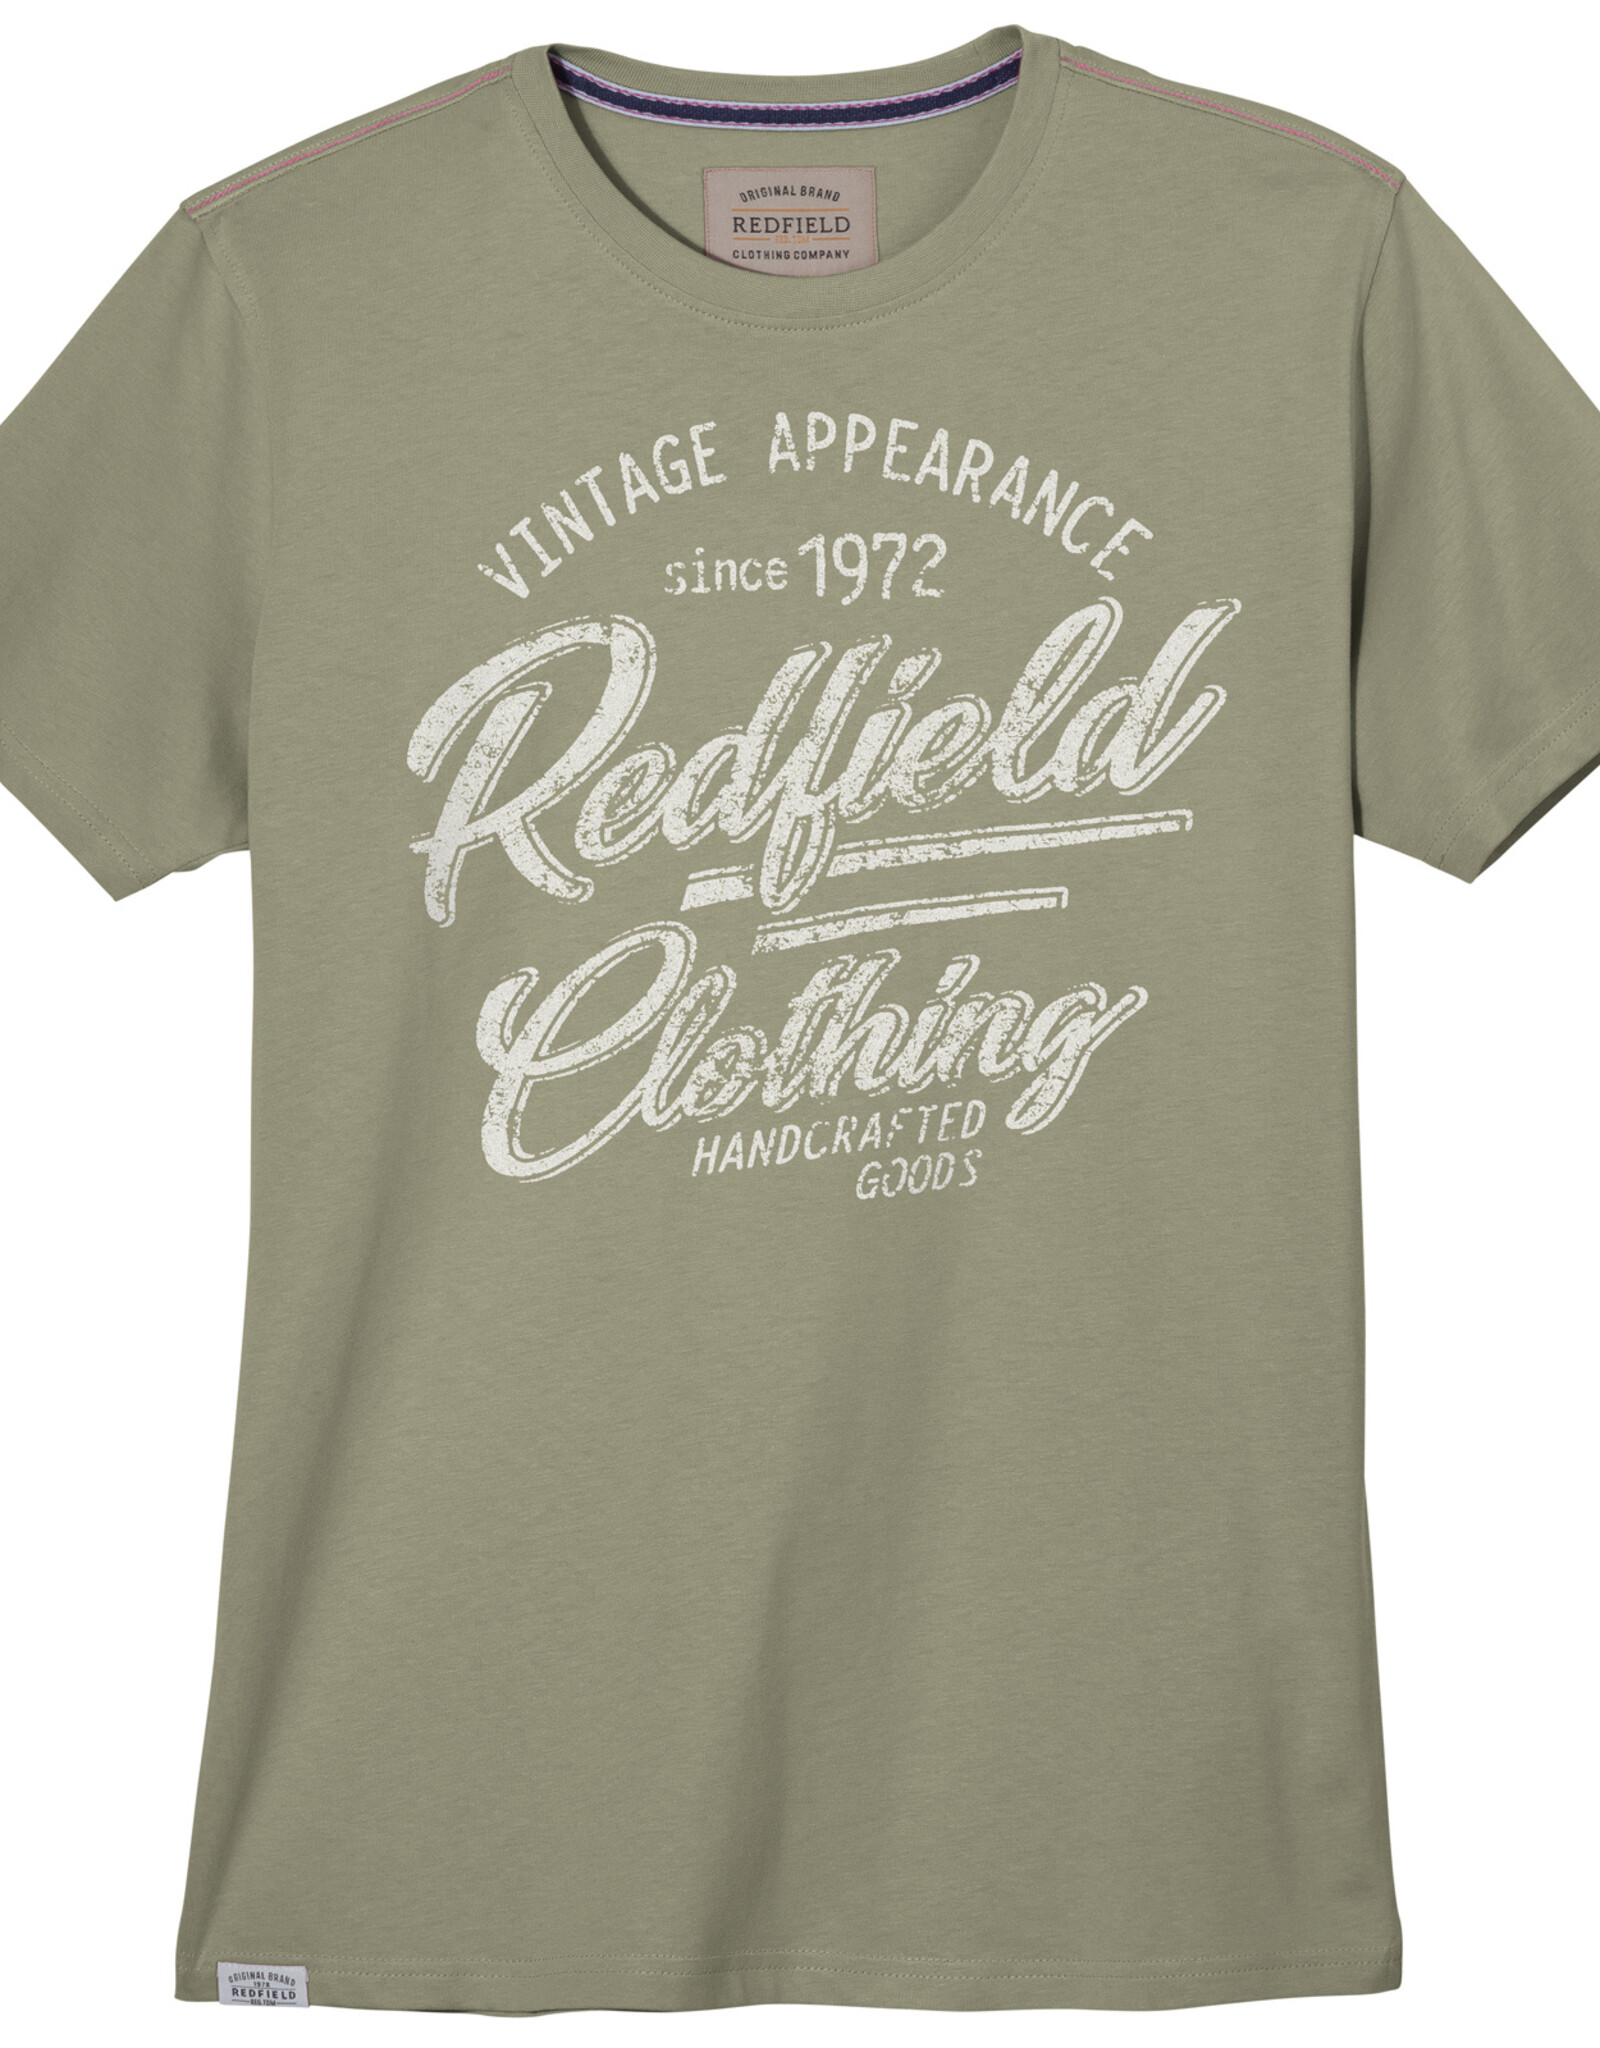 Redfield Redfield T-SHIRT olijf groen Vintage